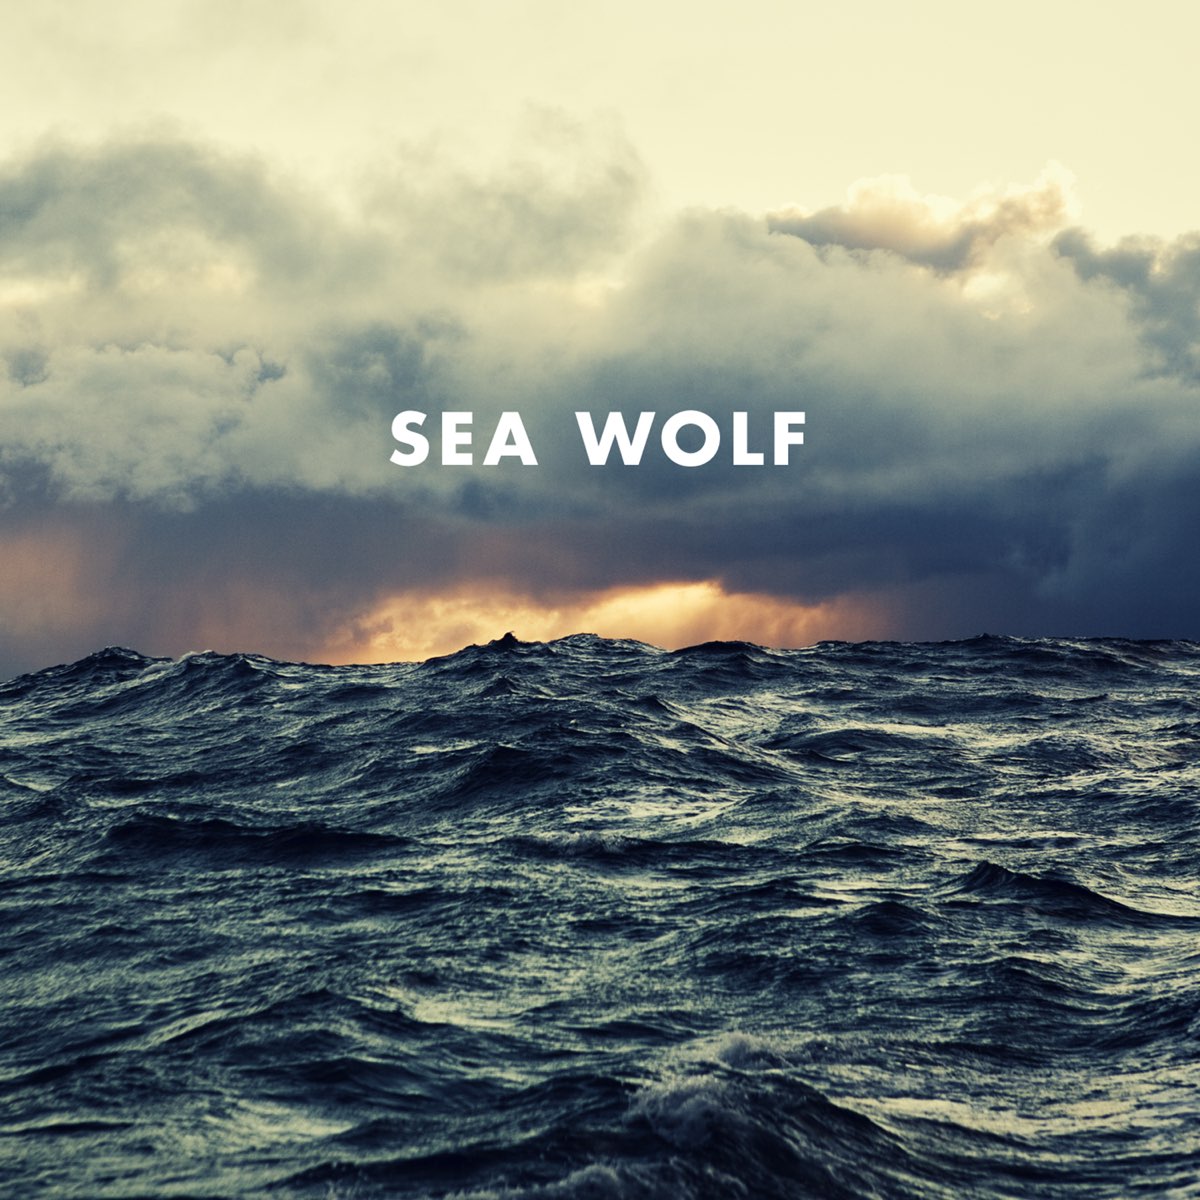 World romance. Обложка море. Обложка альбома море. The Sea-Wolf. Море обложка для трека.